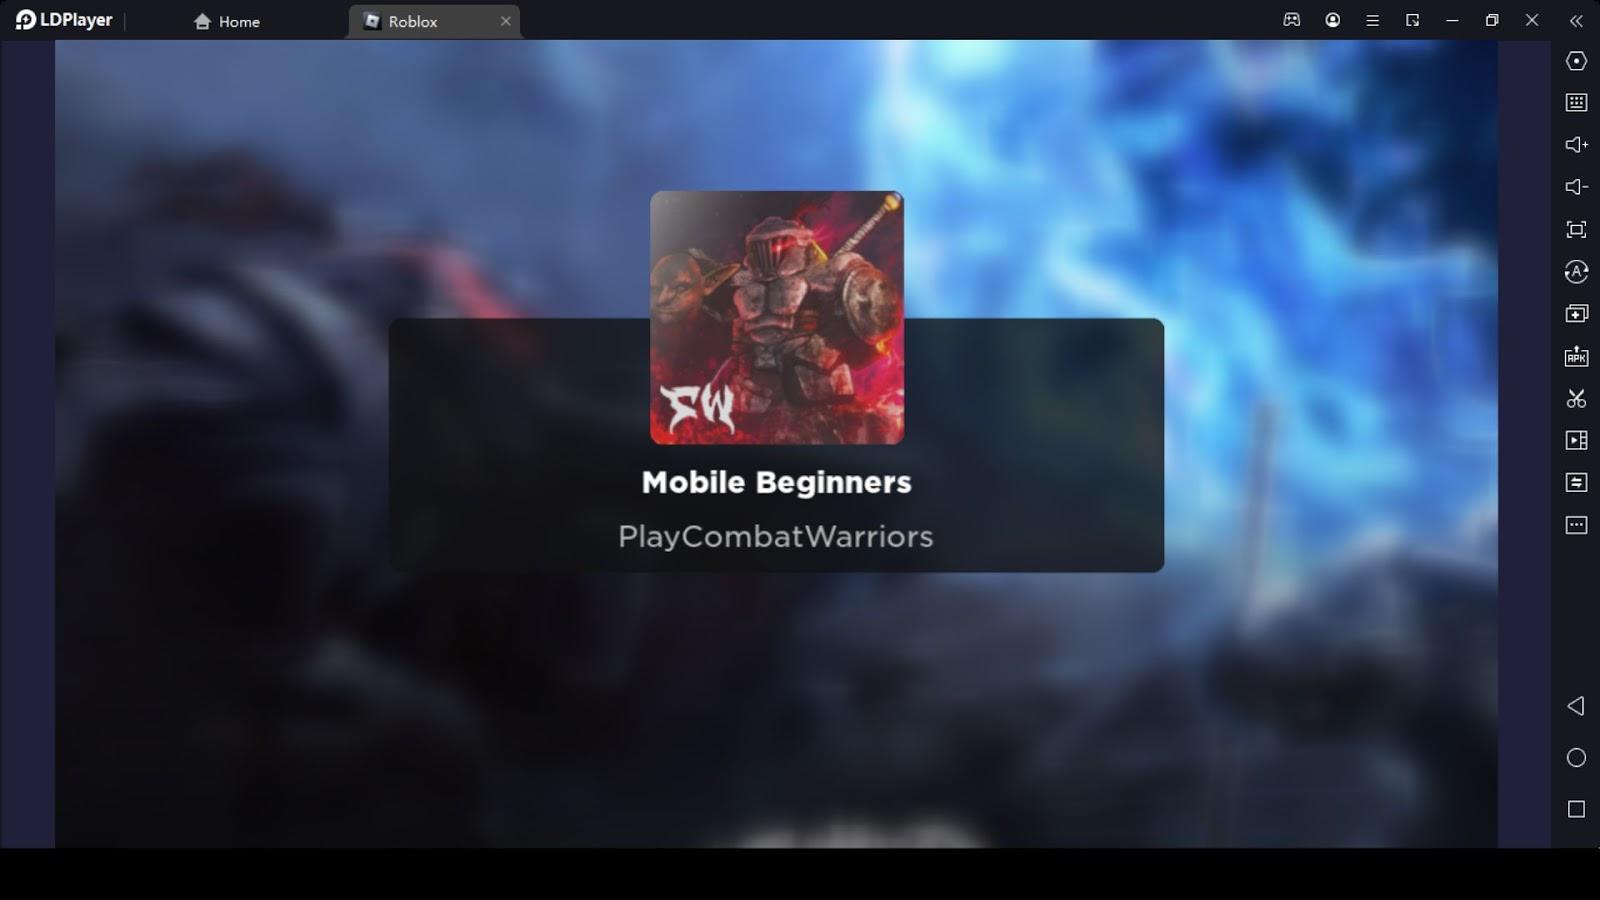 Combat Warriors Codes: Unlock Epic Rewards for Bloody Battles - 2023  December-Redeem Code-LDPlayer